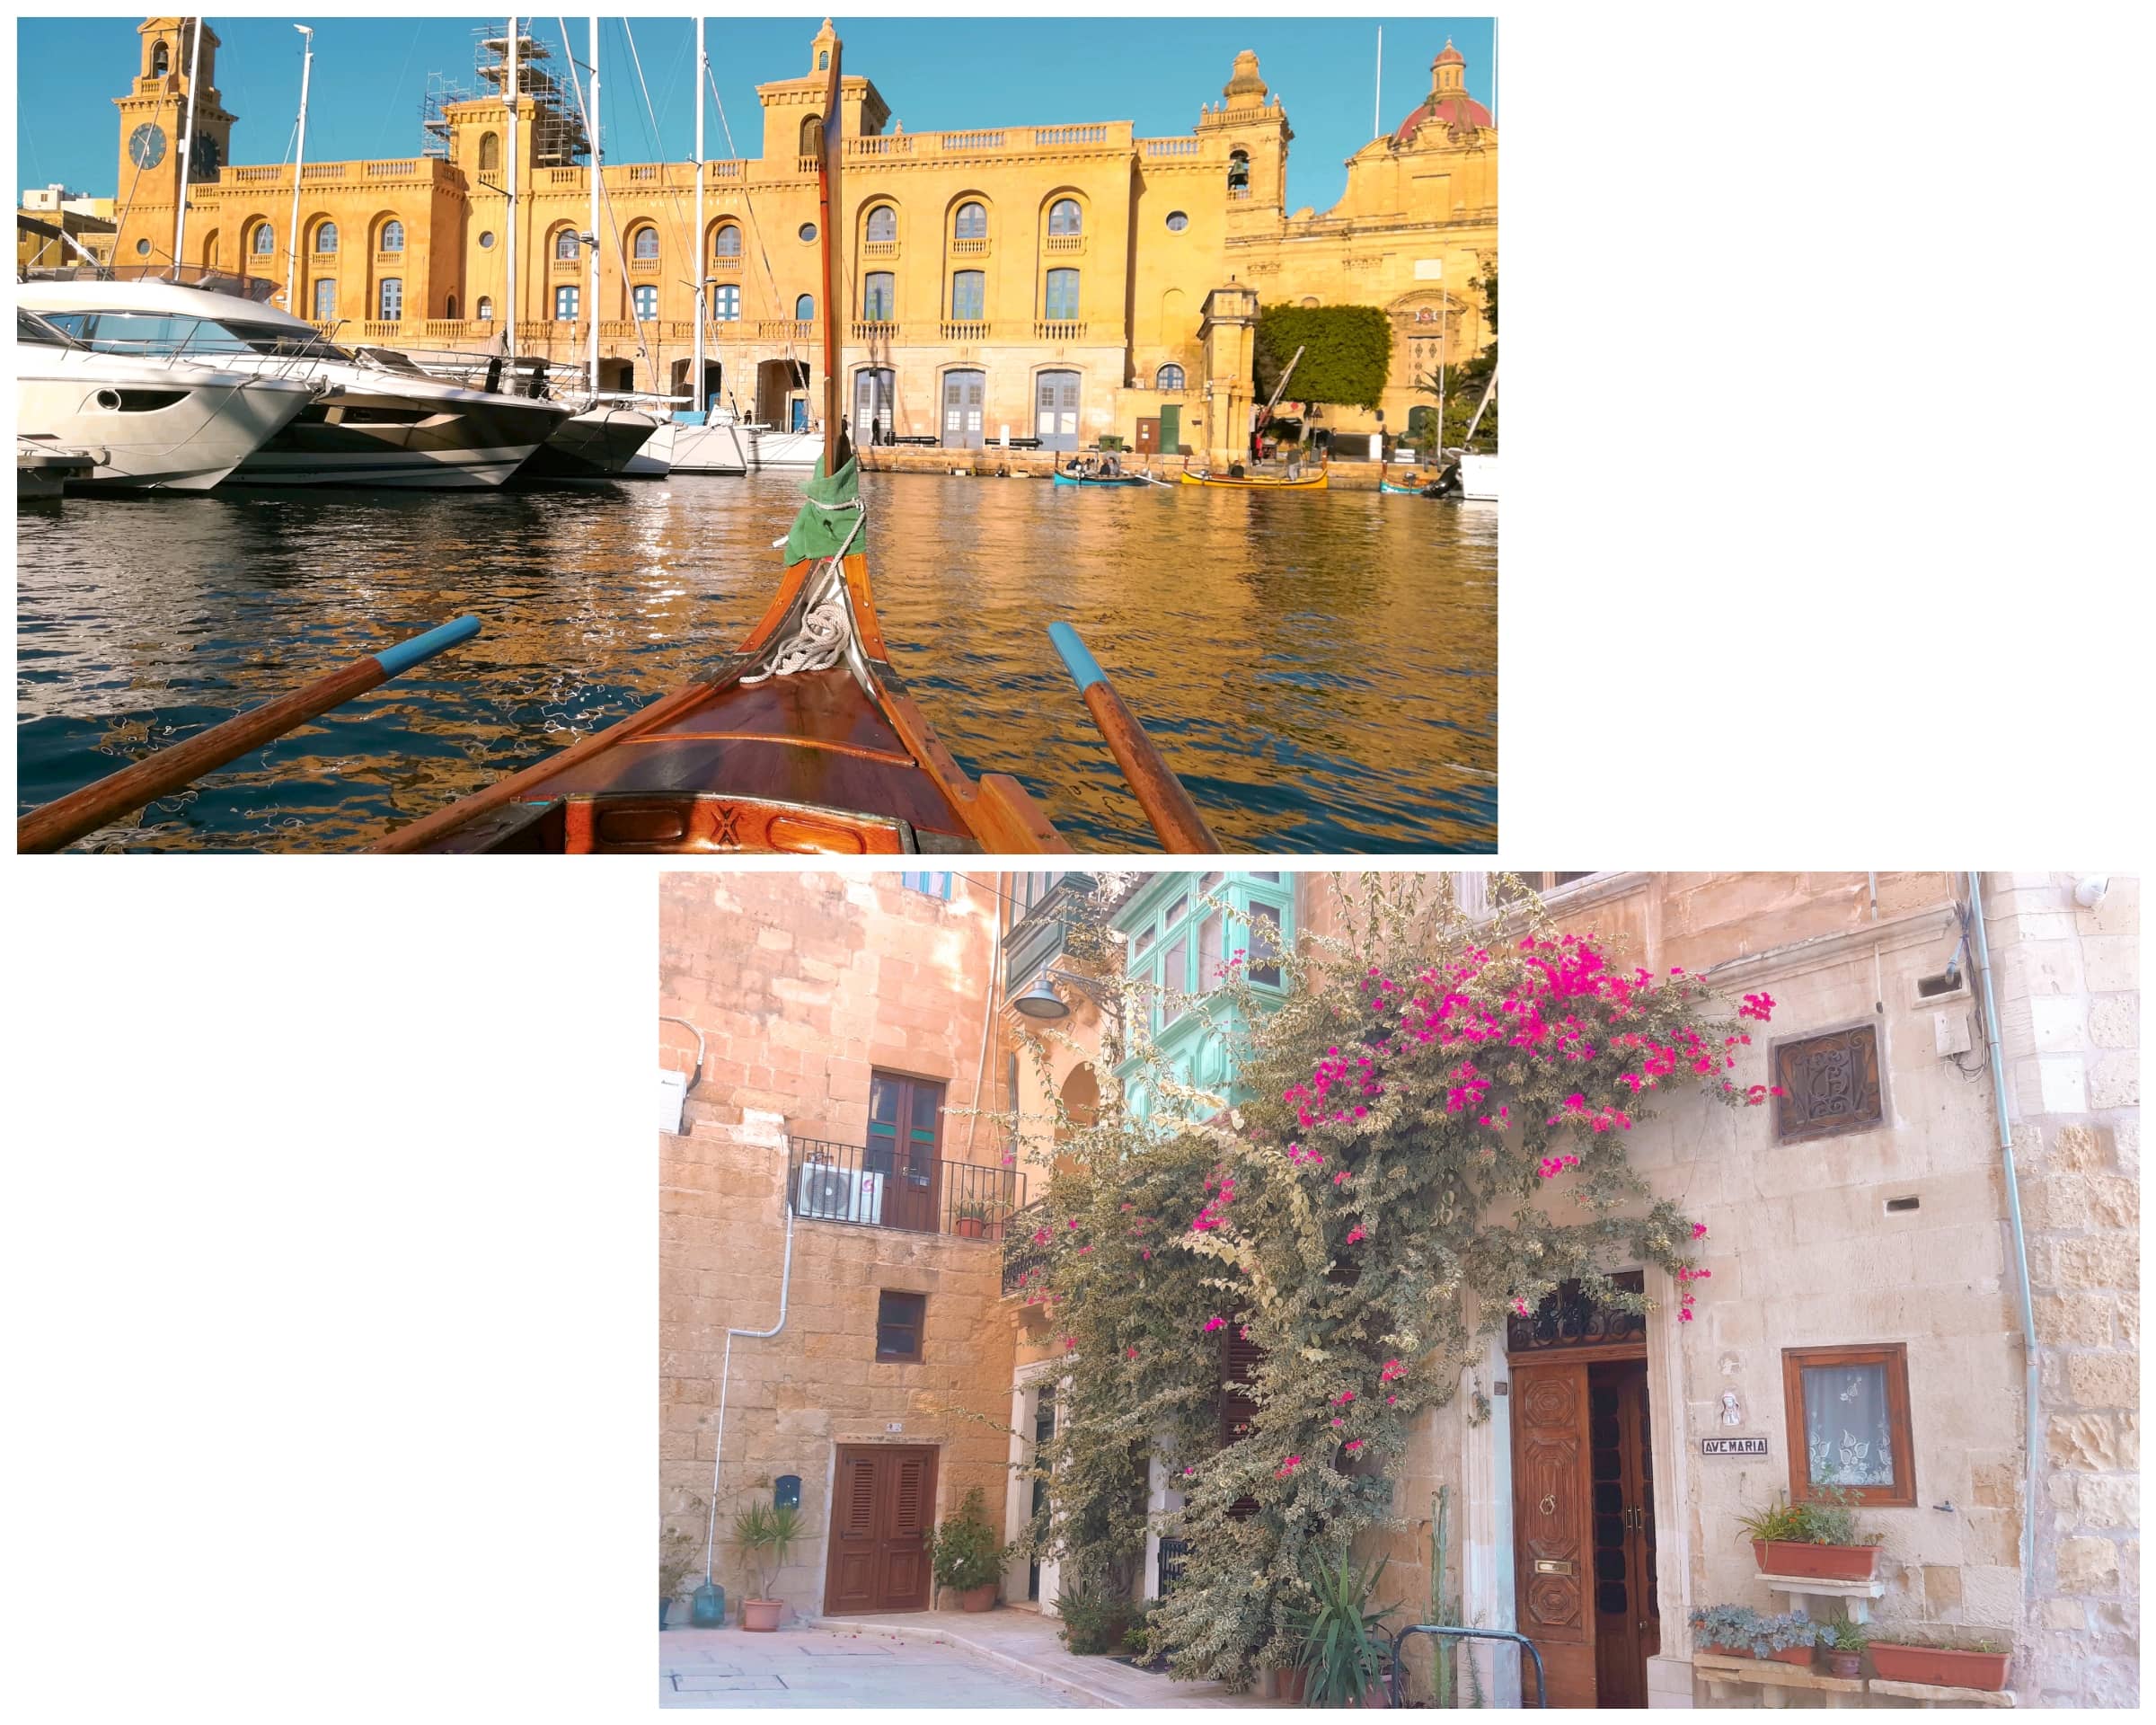 Visit the Three Cities in Malta